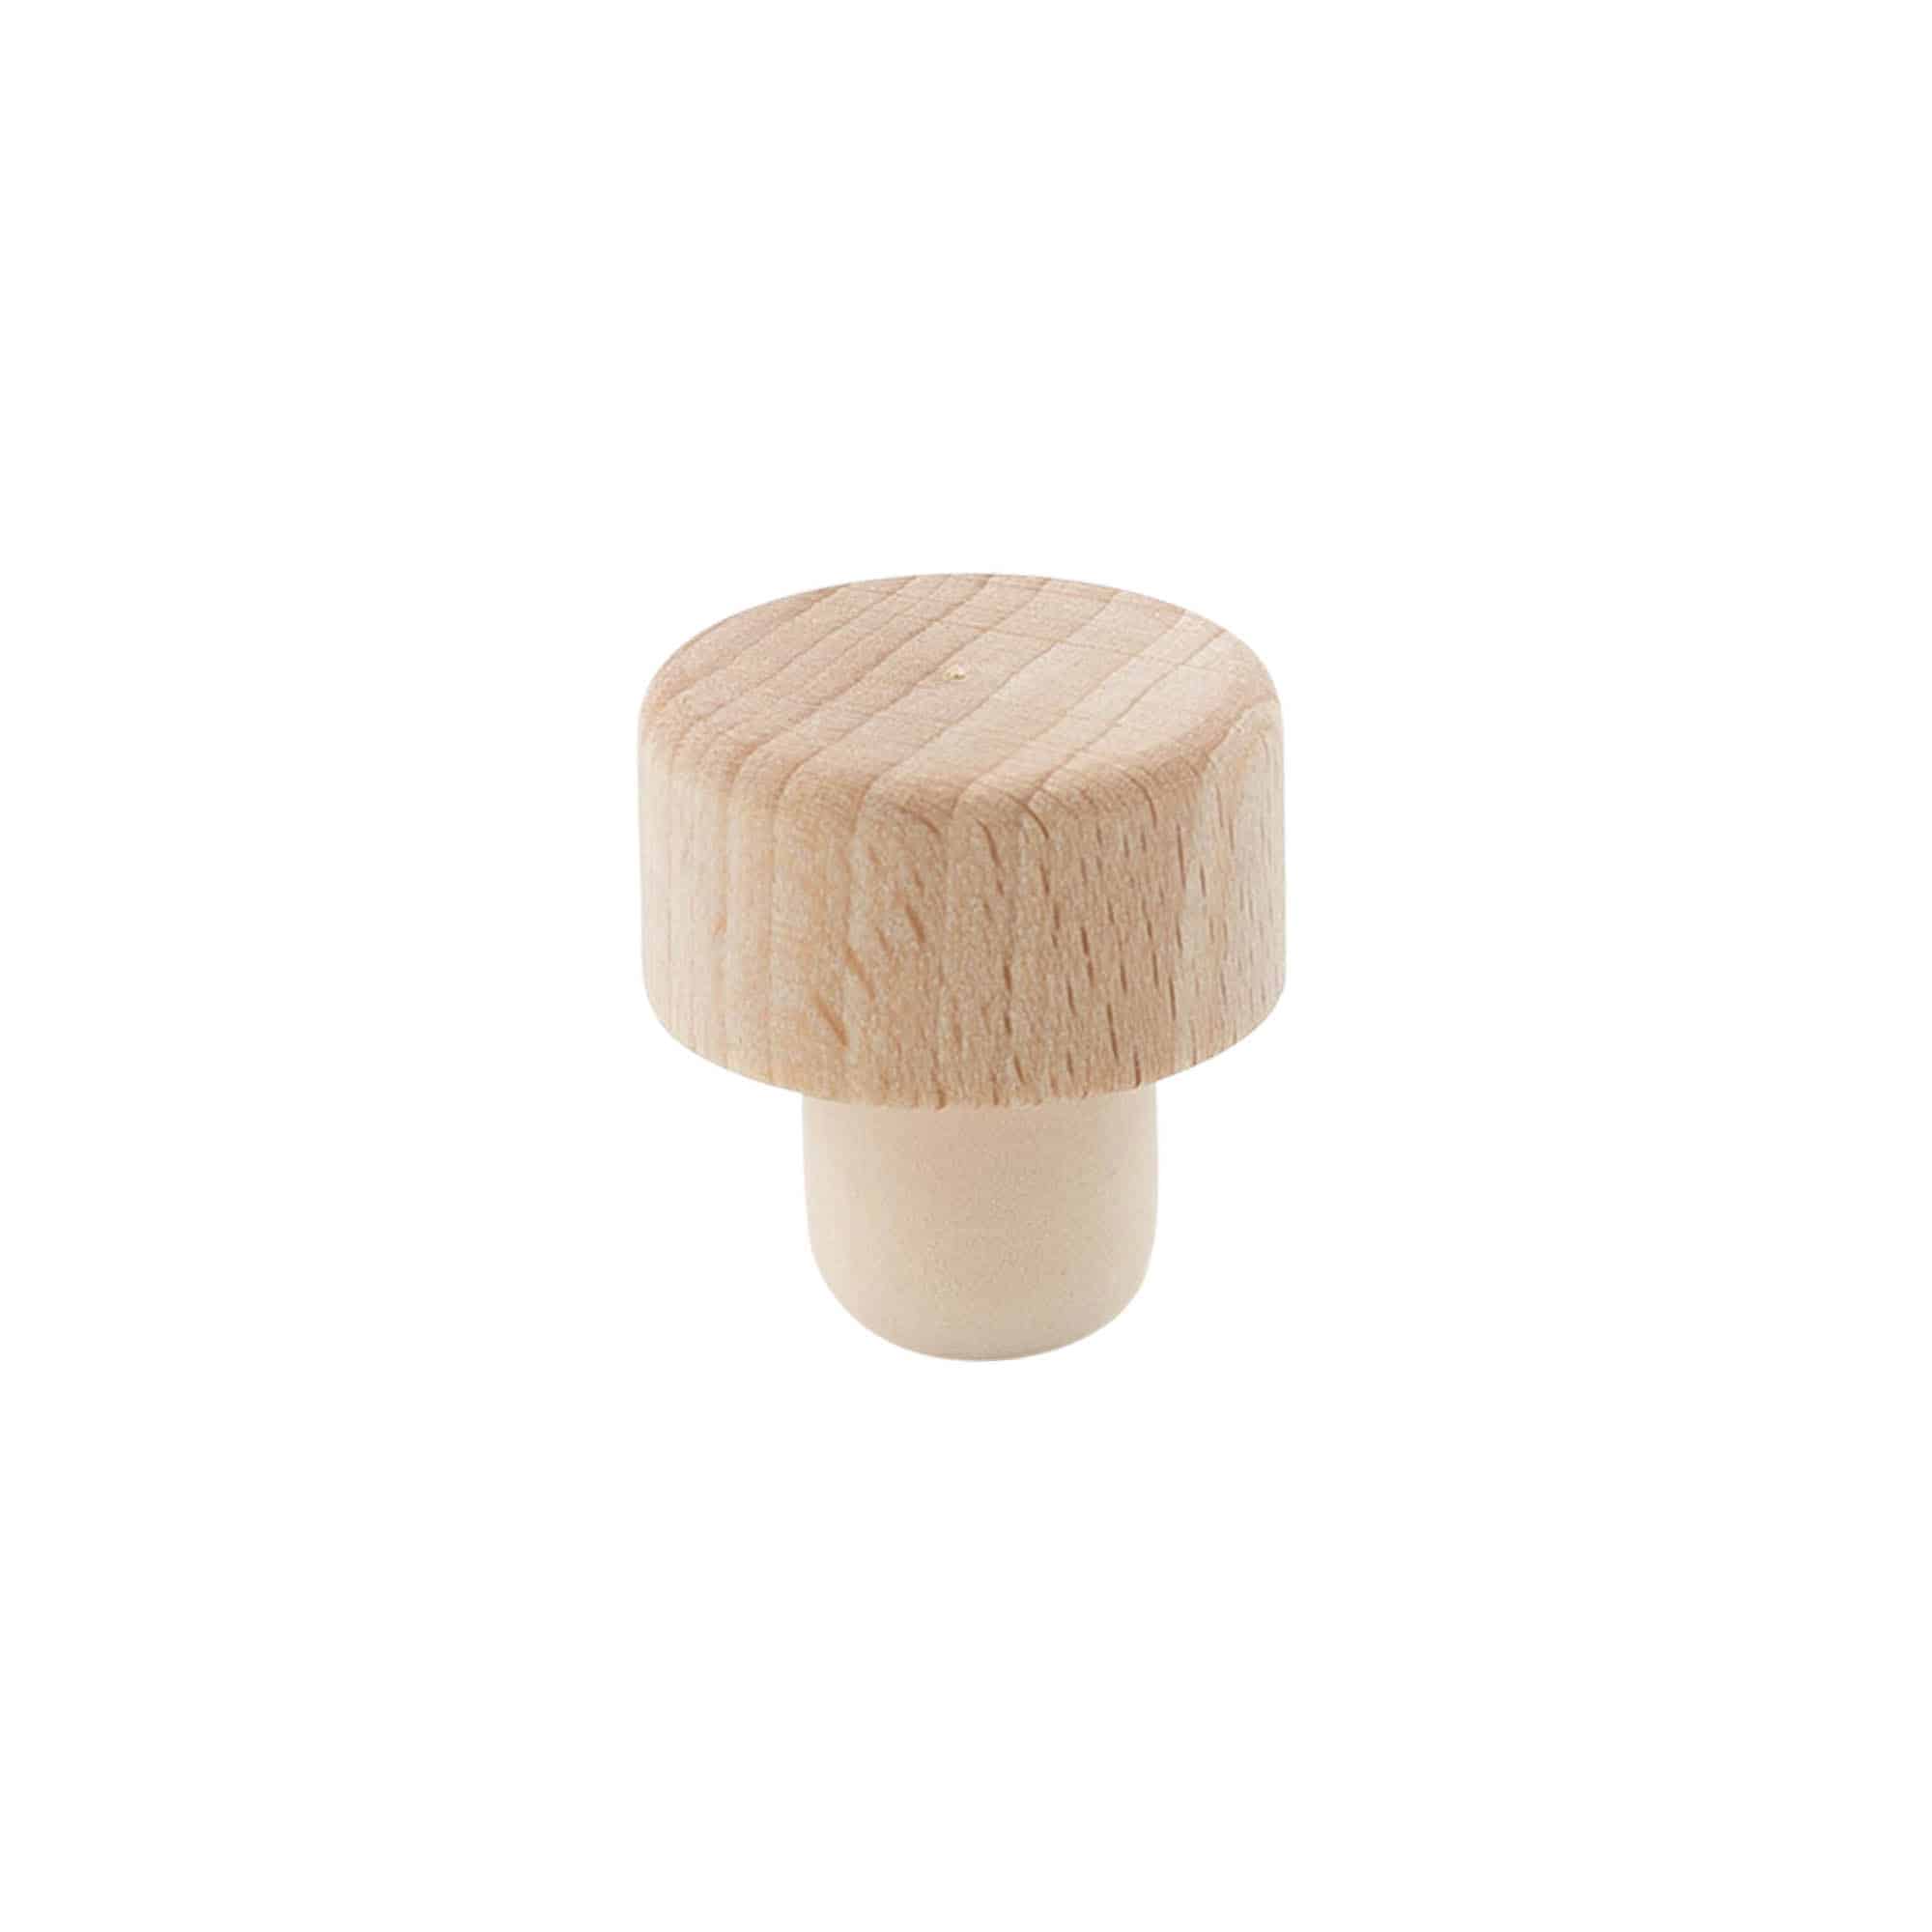 16 mm mushroom cork, wood, for opening: cork